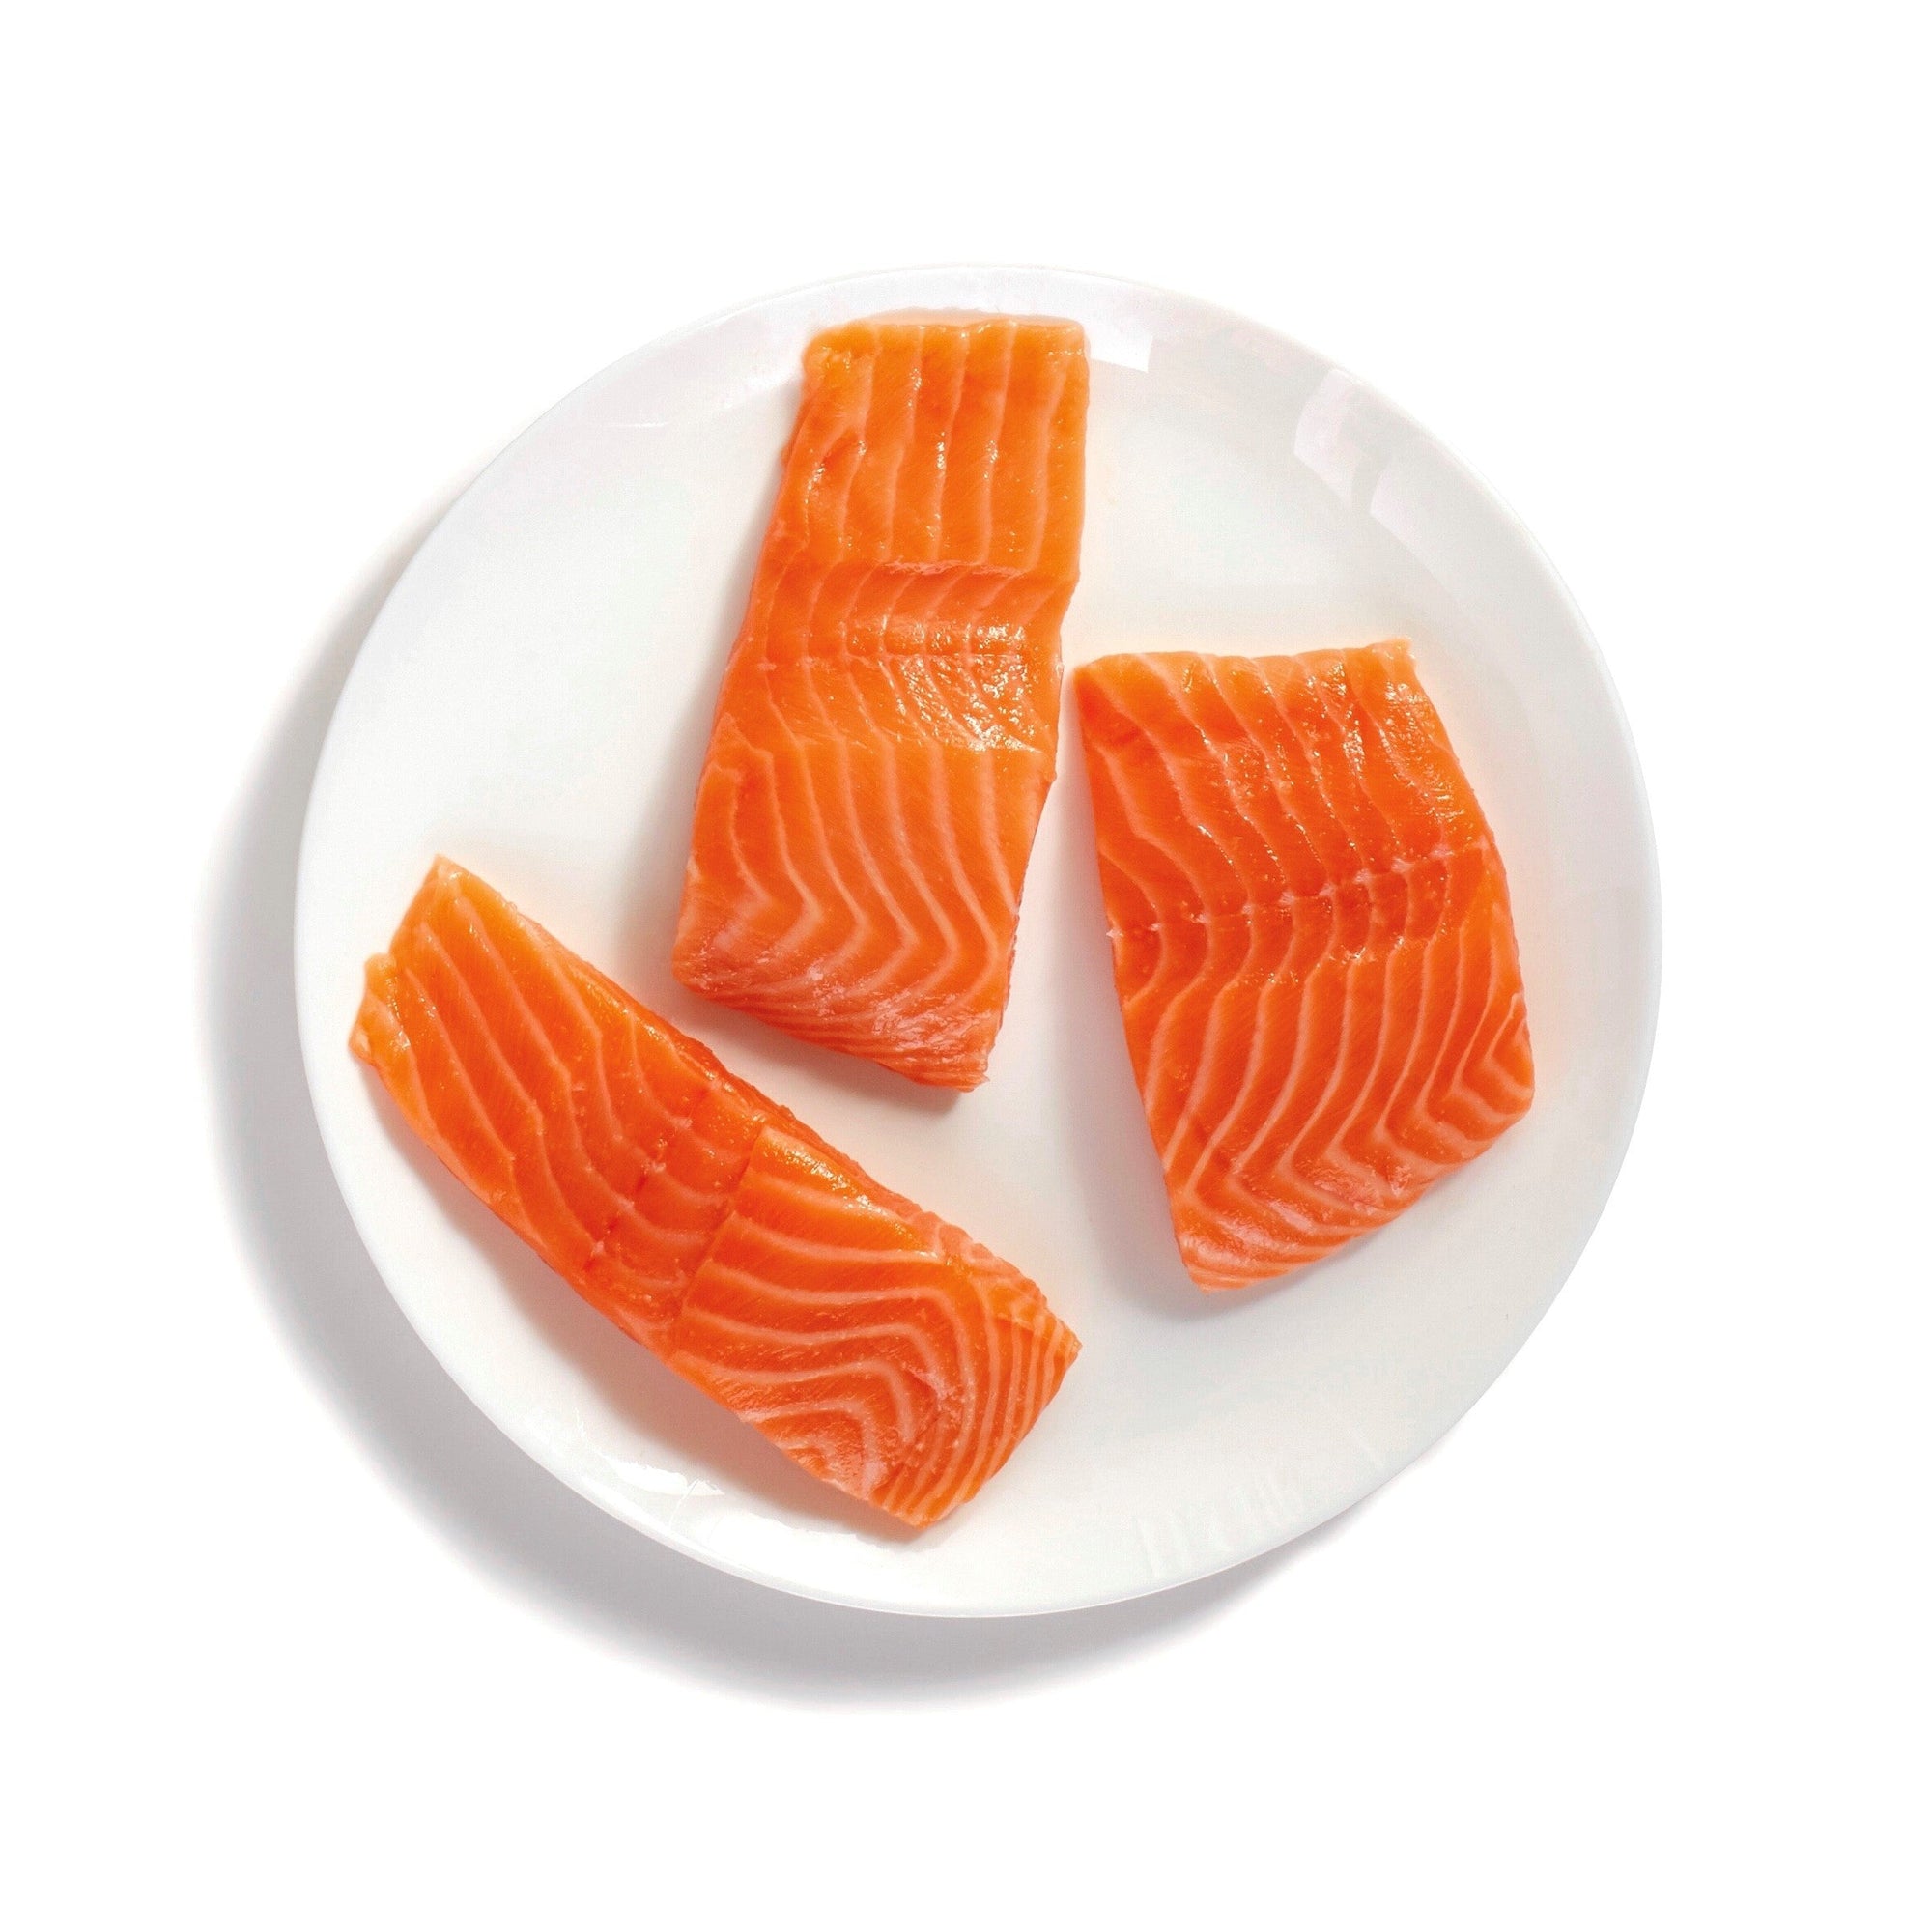 salmon combo box products